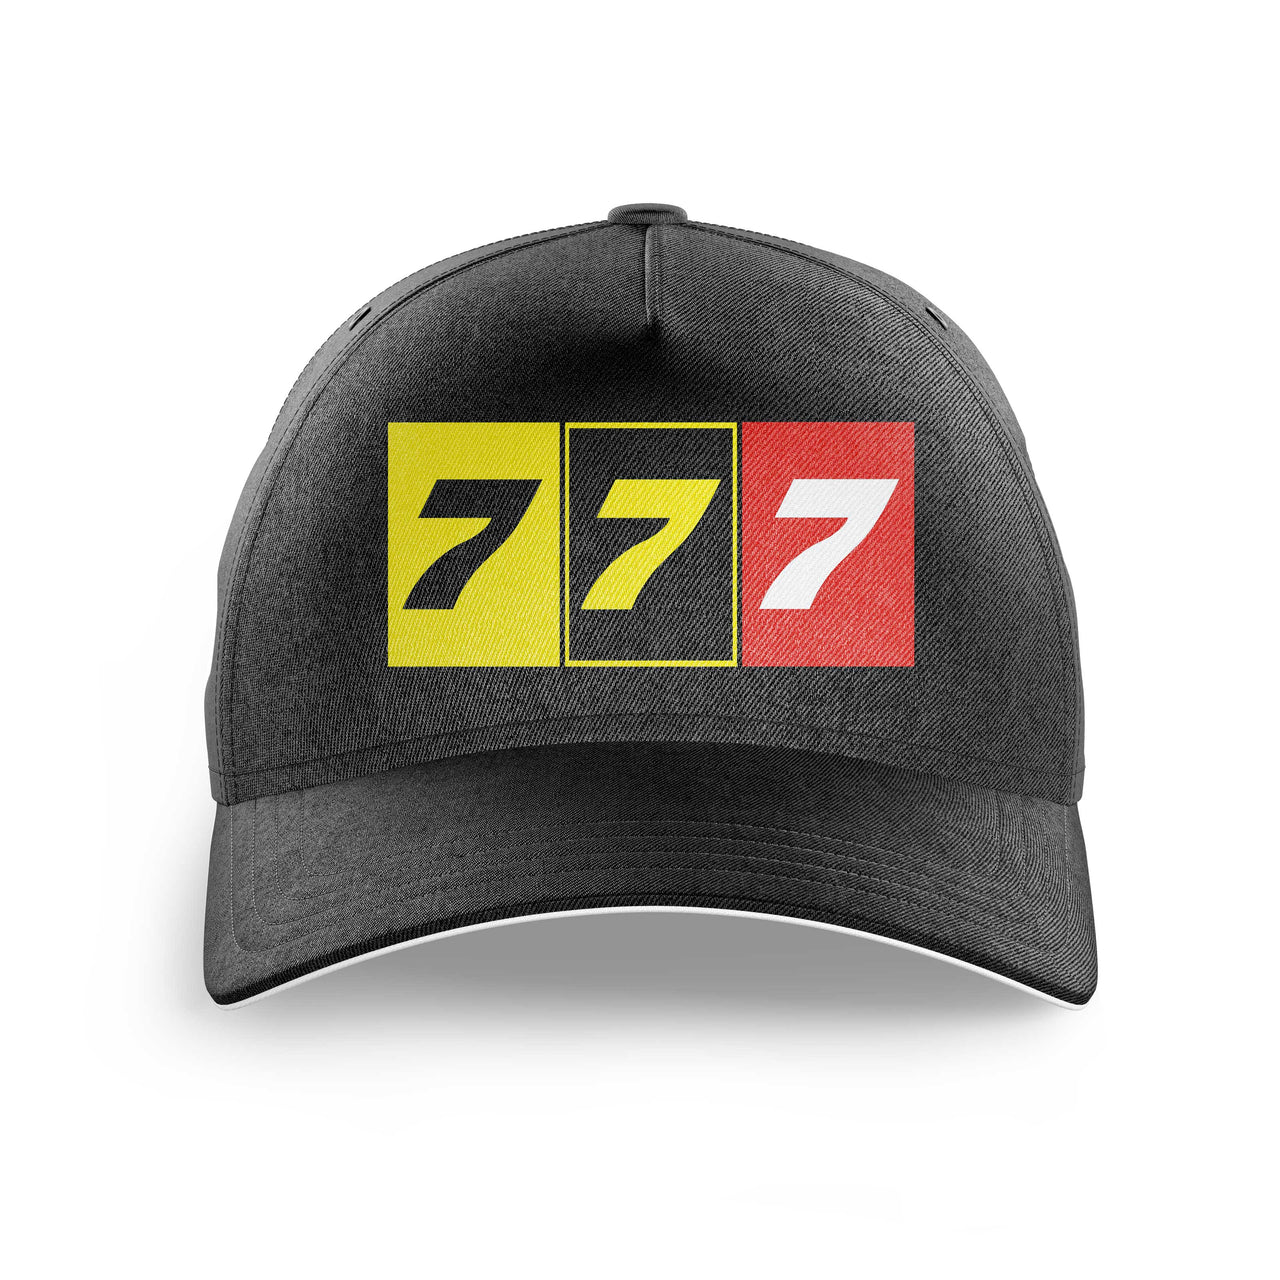 Flat Colourful 777 Printed Hats